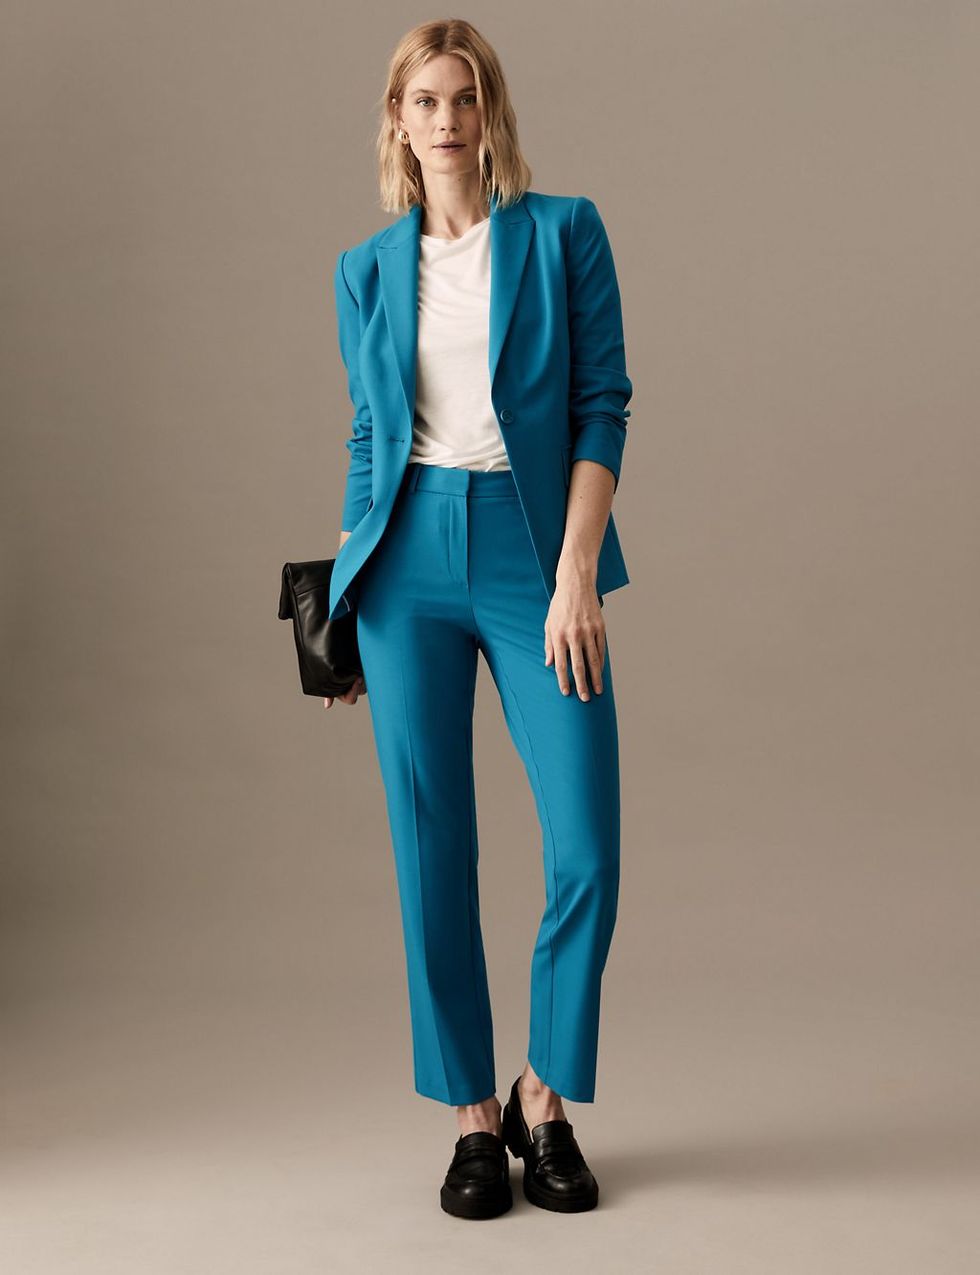 A Fresh Summer Look: White Jacket and Royal Blue Pants - Susanna